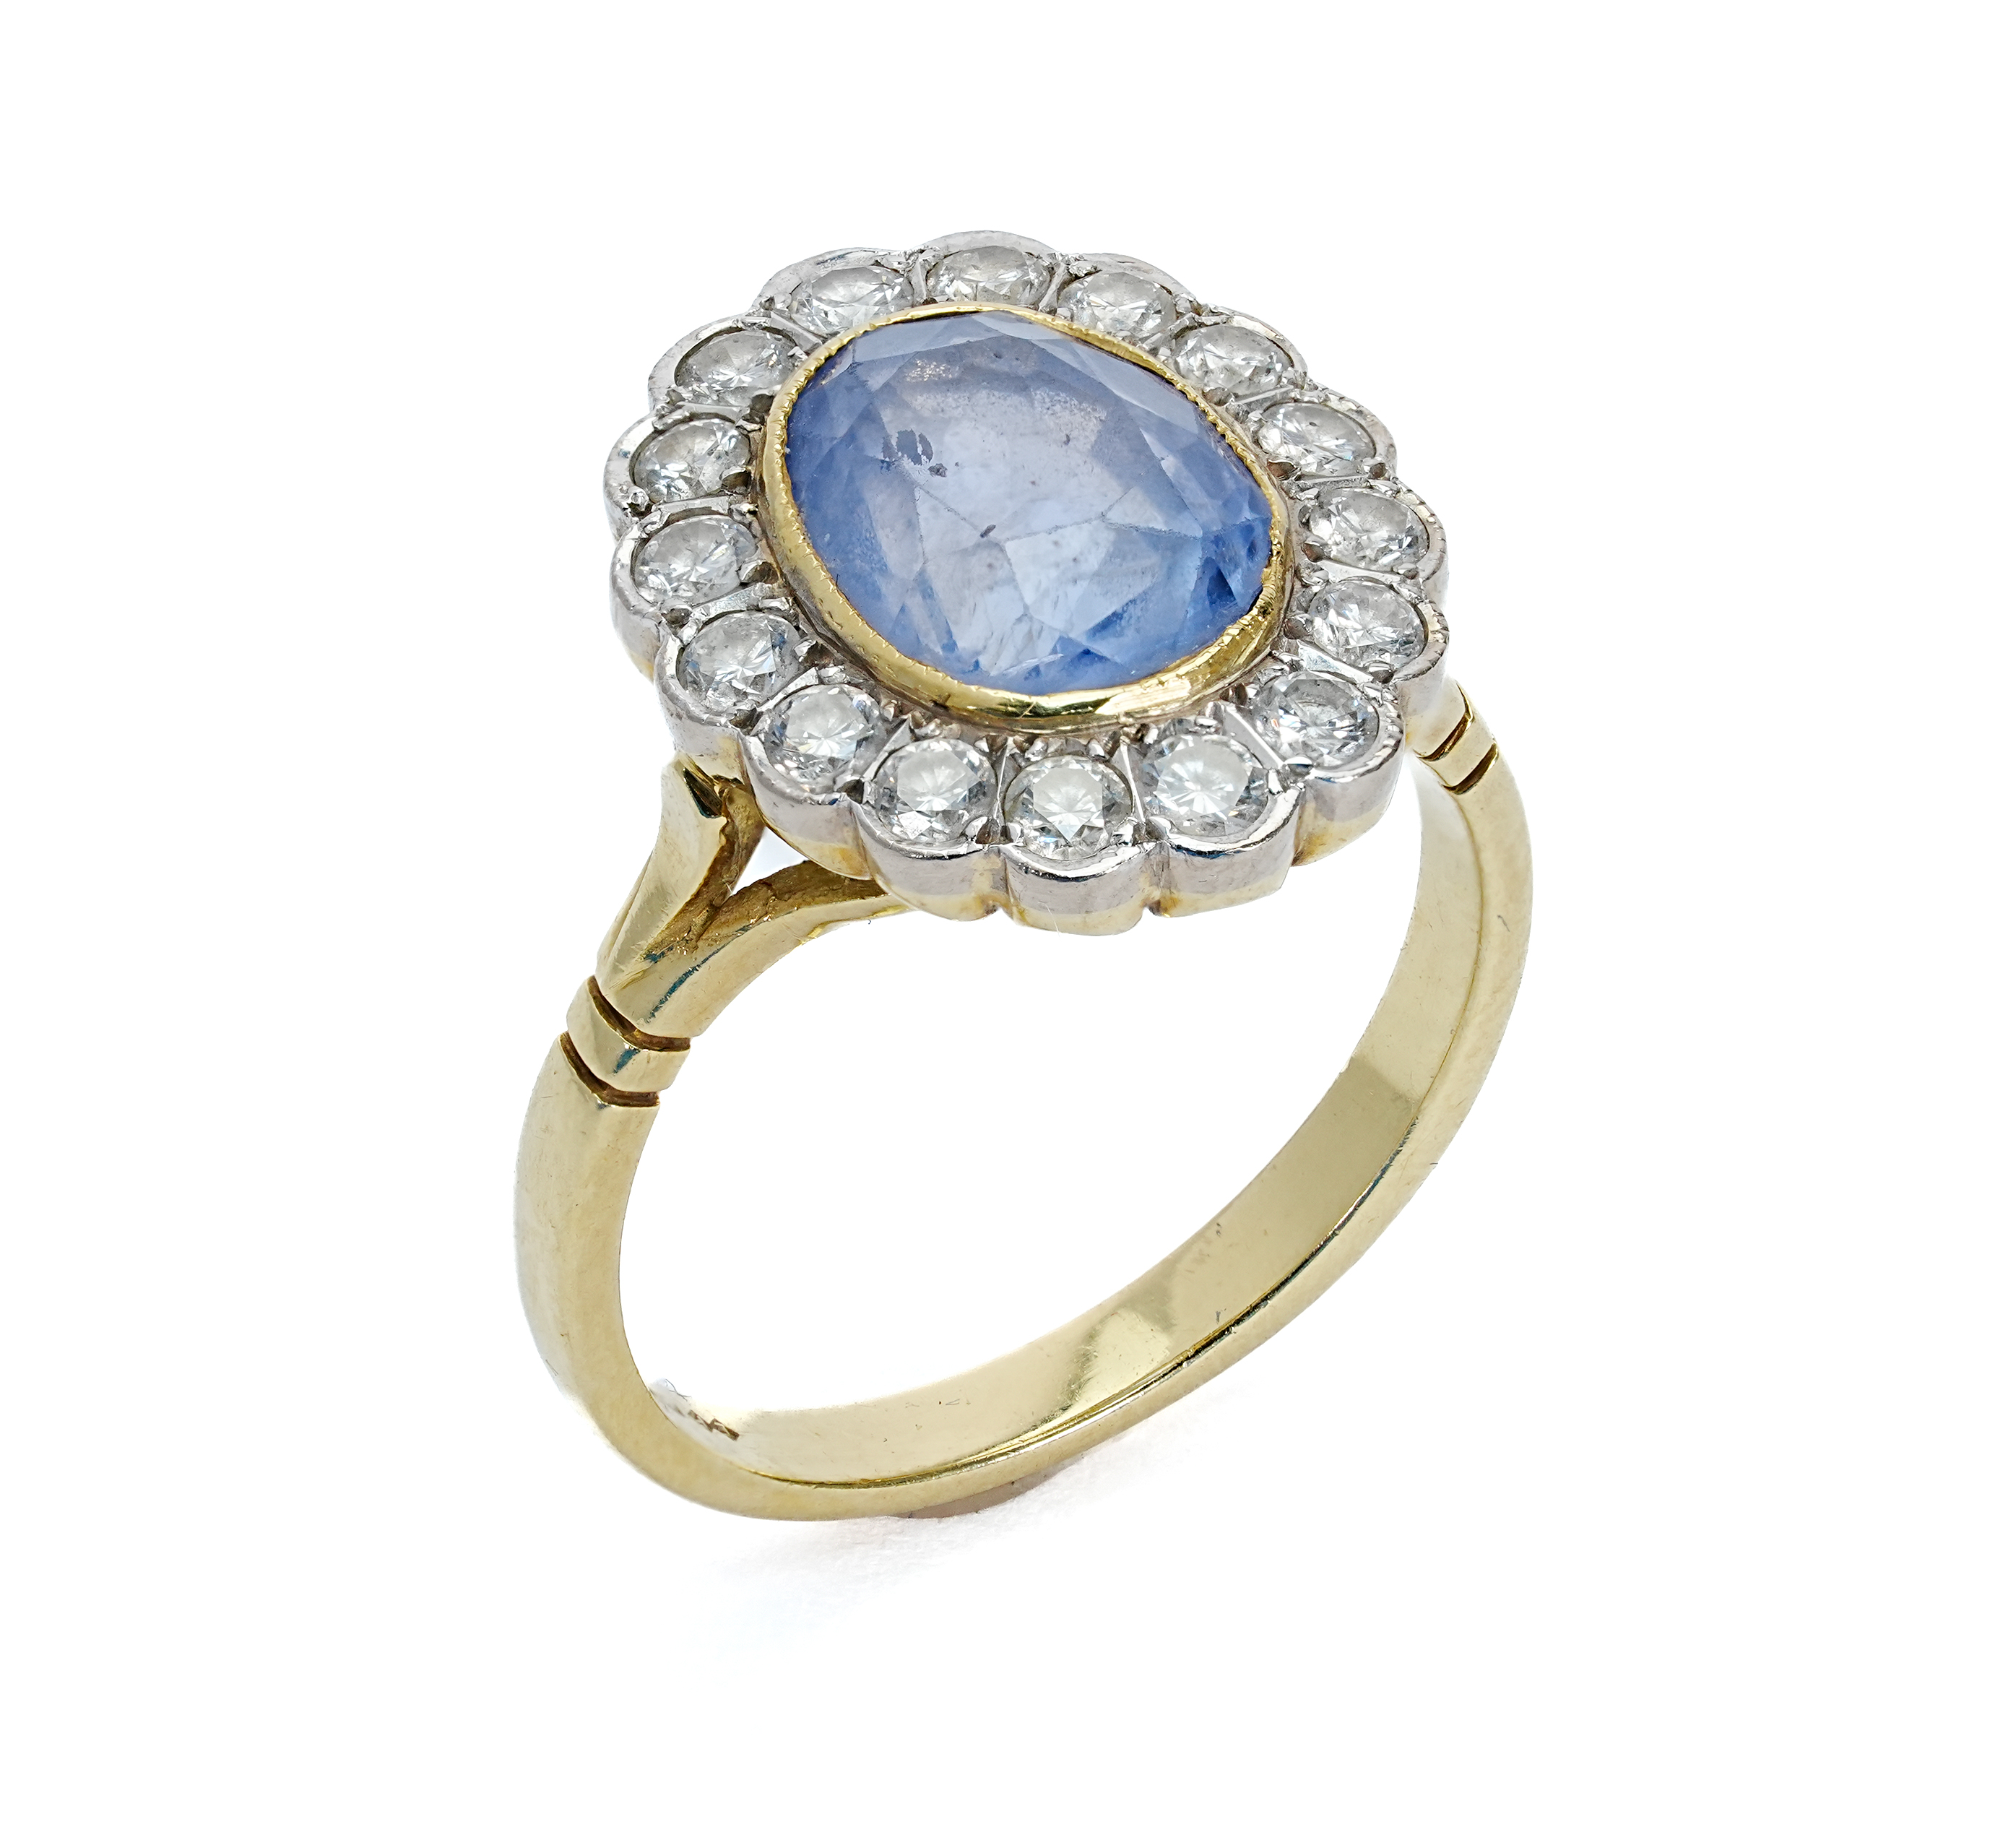 18ct Gold, Diamond and Ceylonese Sapphire Ring - Image 3 of 3